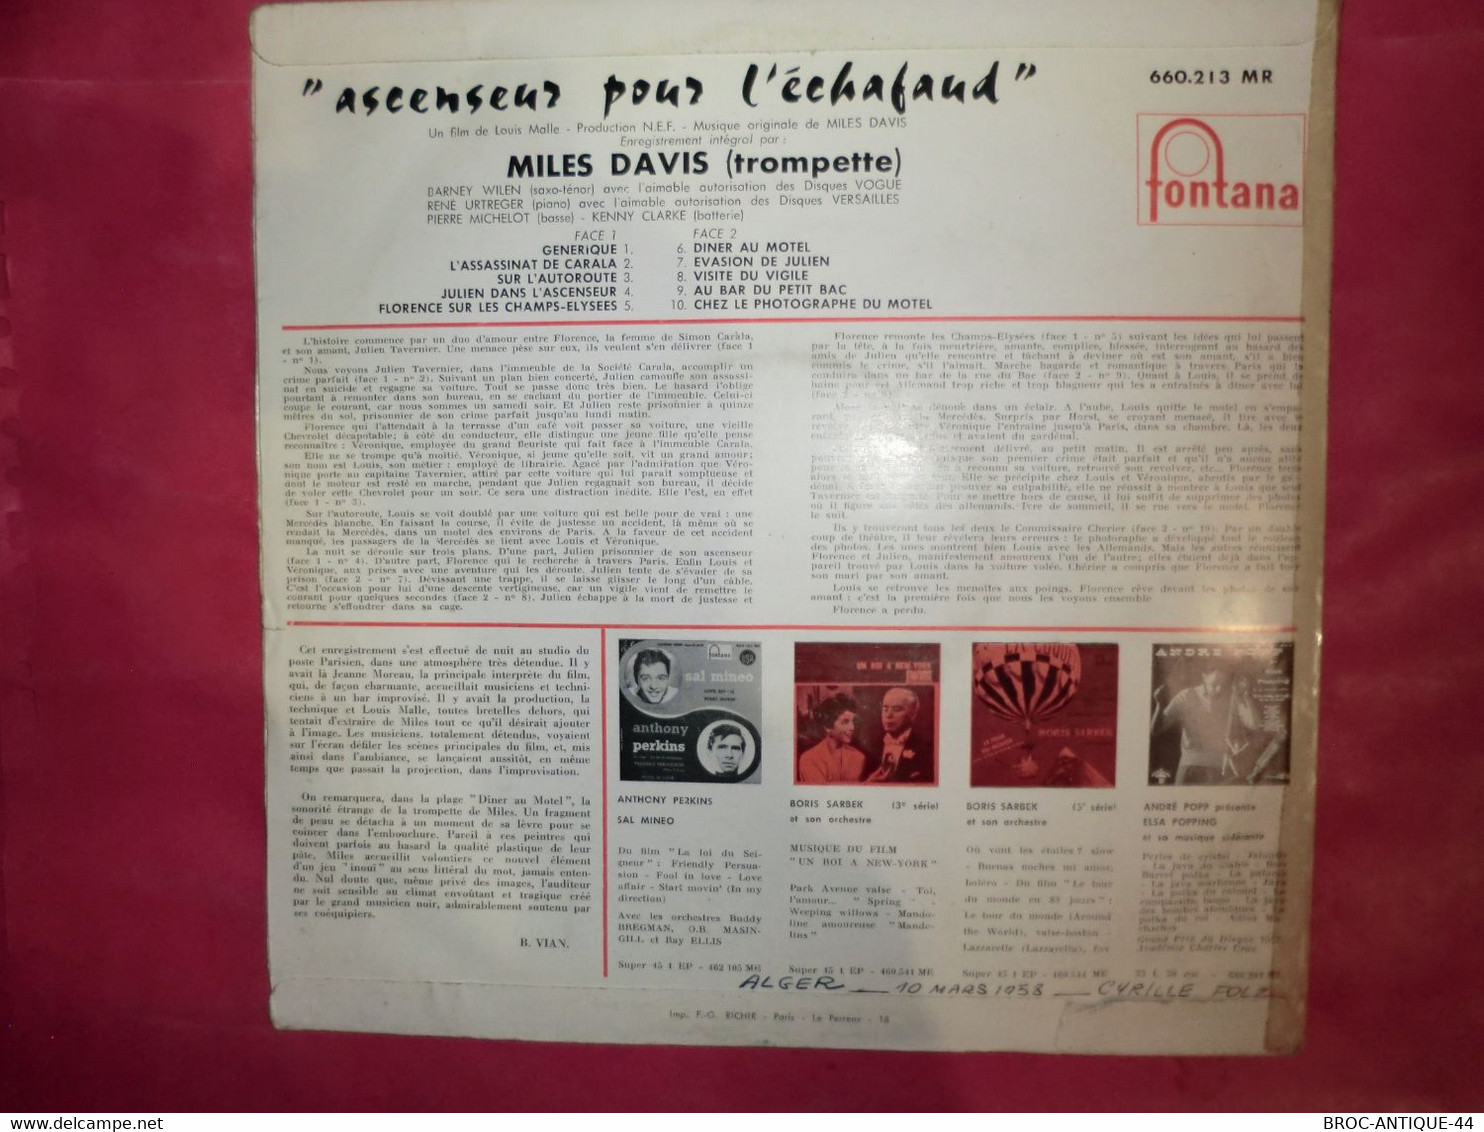 LP33 N°8673 - ASCENSEUR POUR L' ECHAFAUD - ART BLAKEY & THE JAZZ MESSENGER - 660.213 MR - FORMAT 10" - MADE IN FRANCE - Jazz